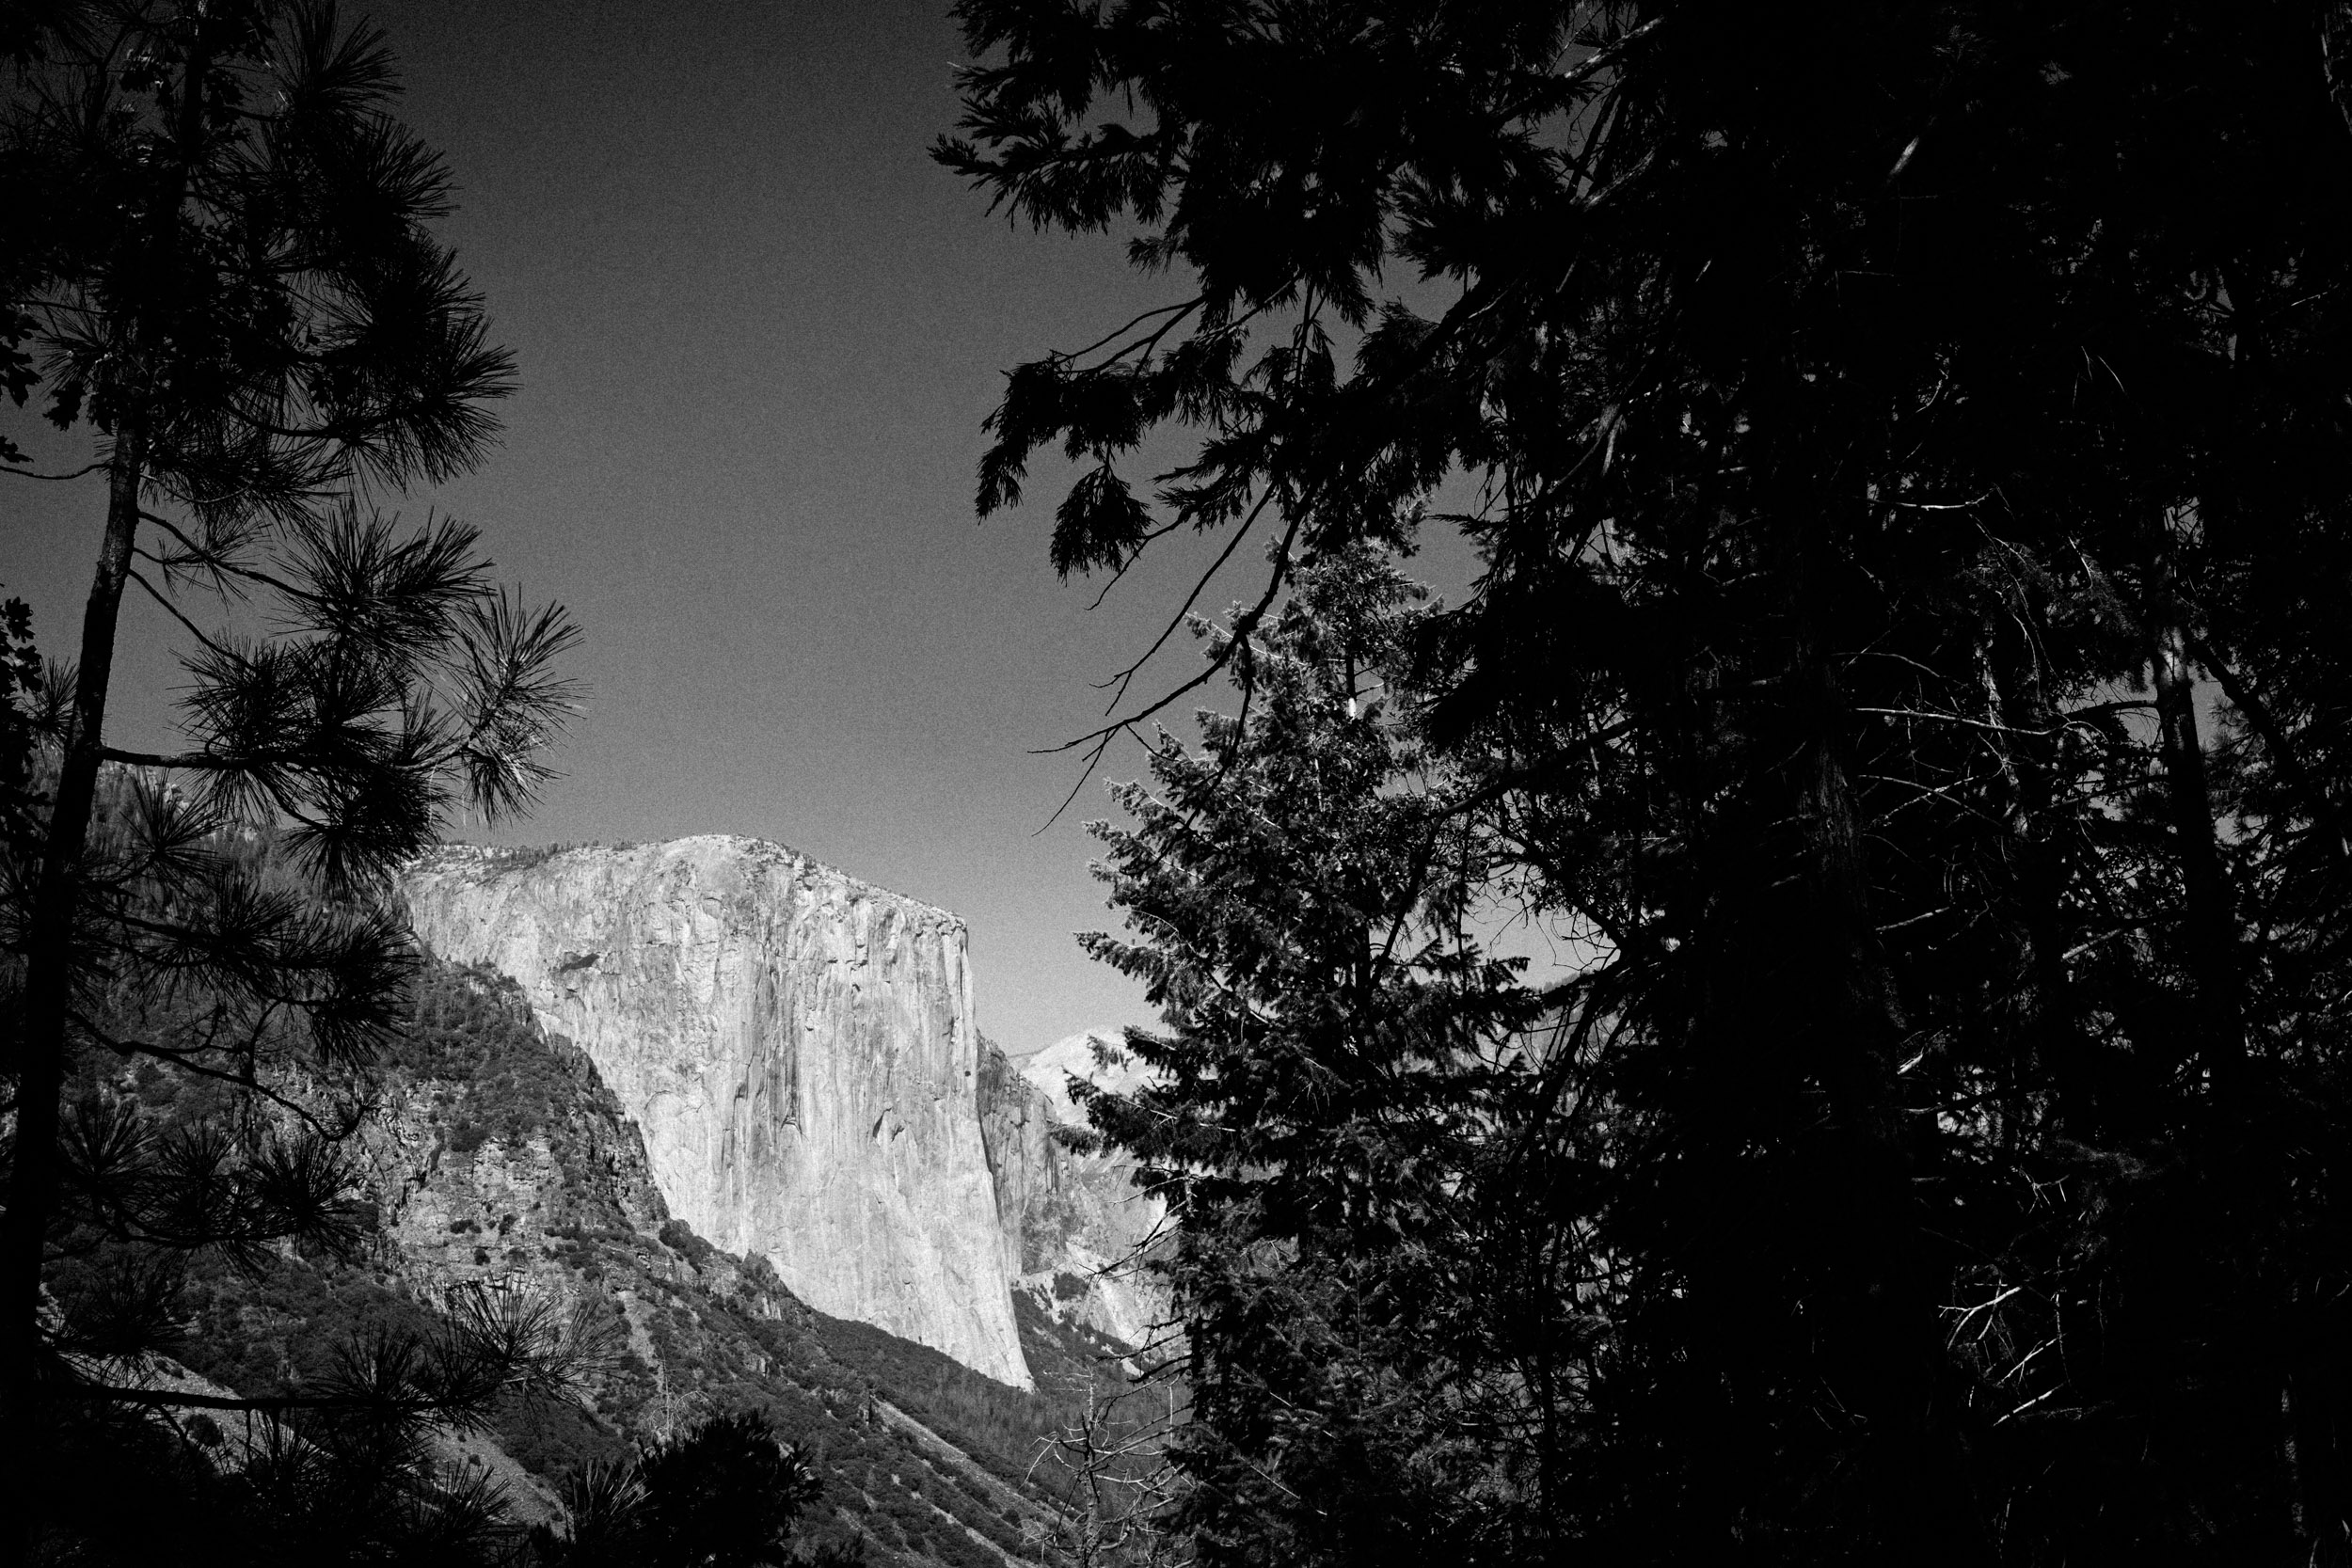 El Capitan flies high above Yosemite Valley floor